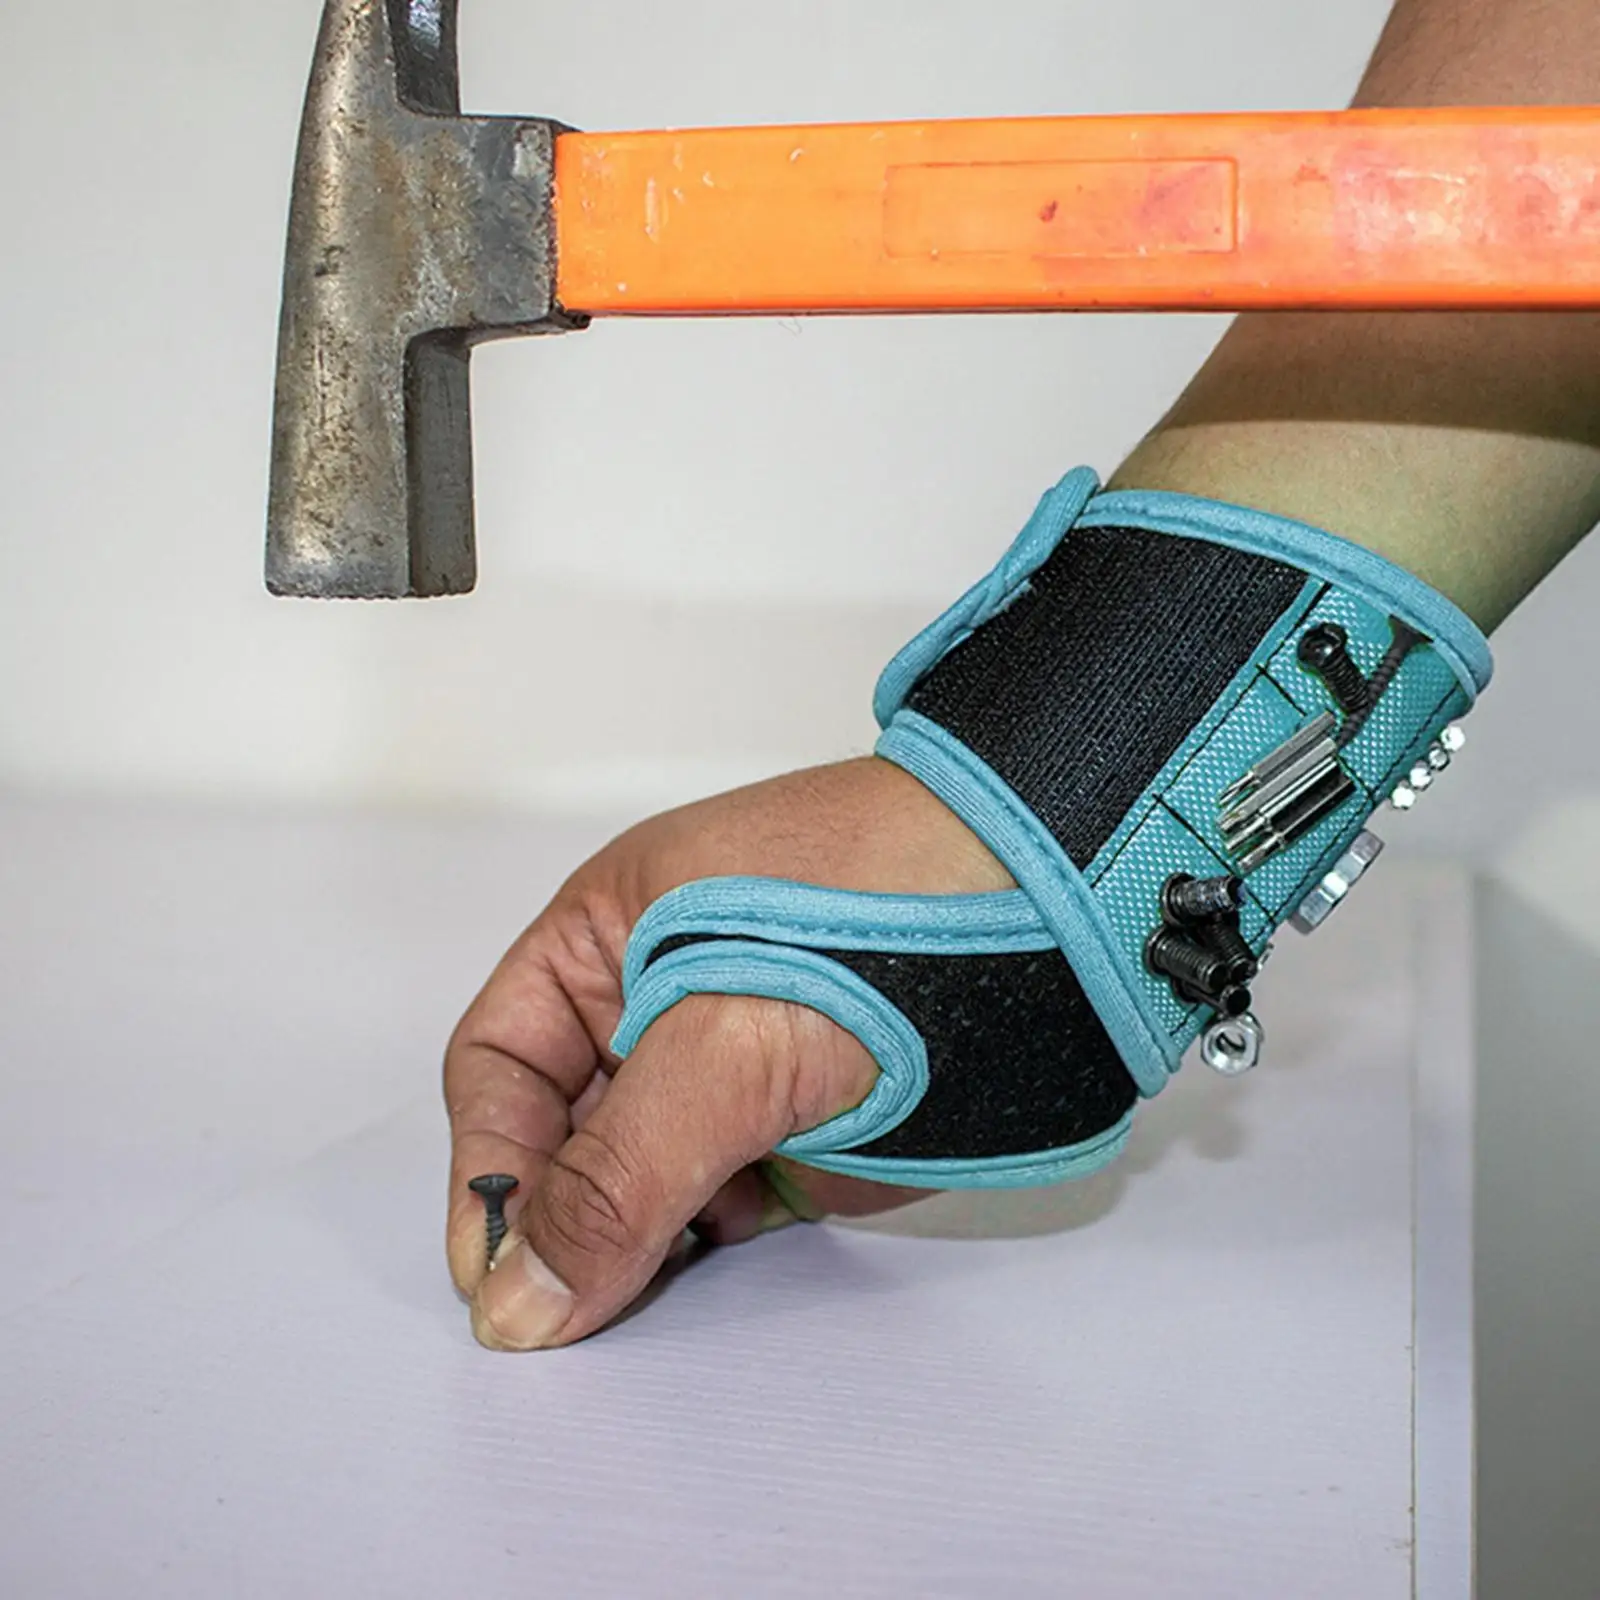 Magnetic Wristband, Organiser Holder with 9 Magnets Tool Belt for Holding Screws Drilling Husband Carpenters Handyman